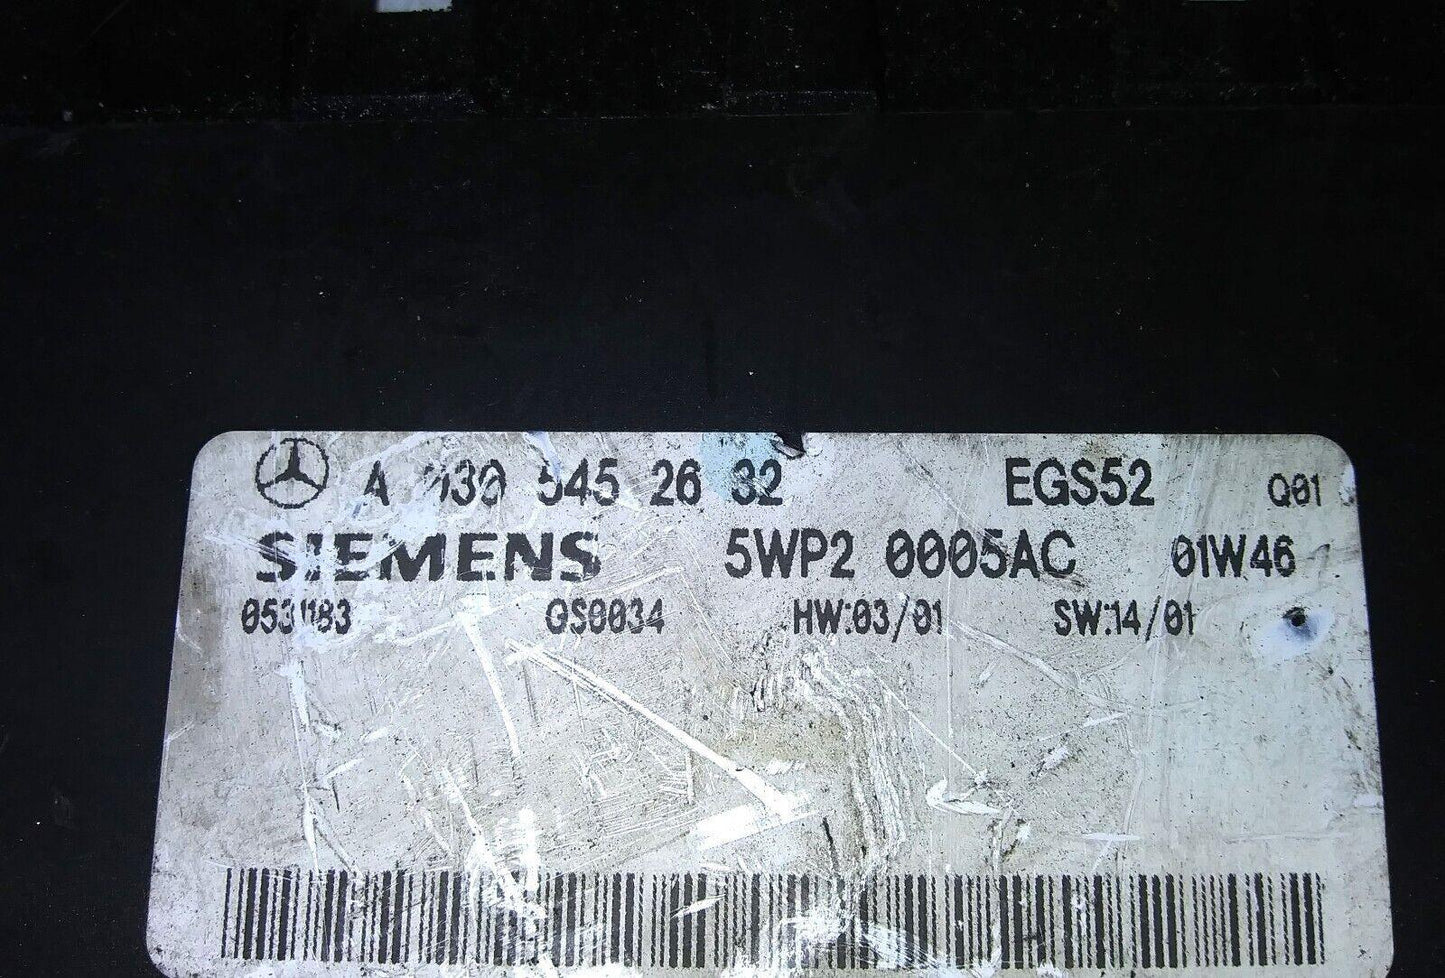 A 022 545 16 32 Mercedes ML320 1998-1999 TCM transmission computer - Swan Auto